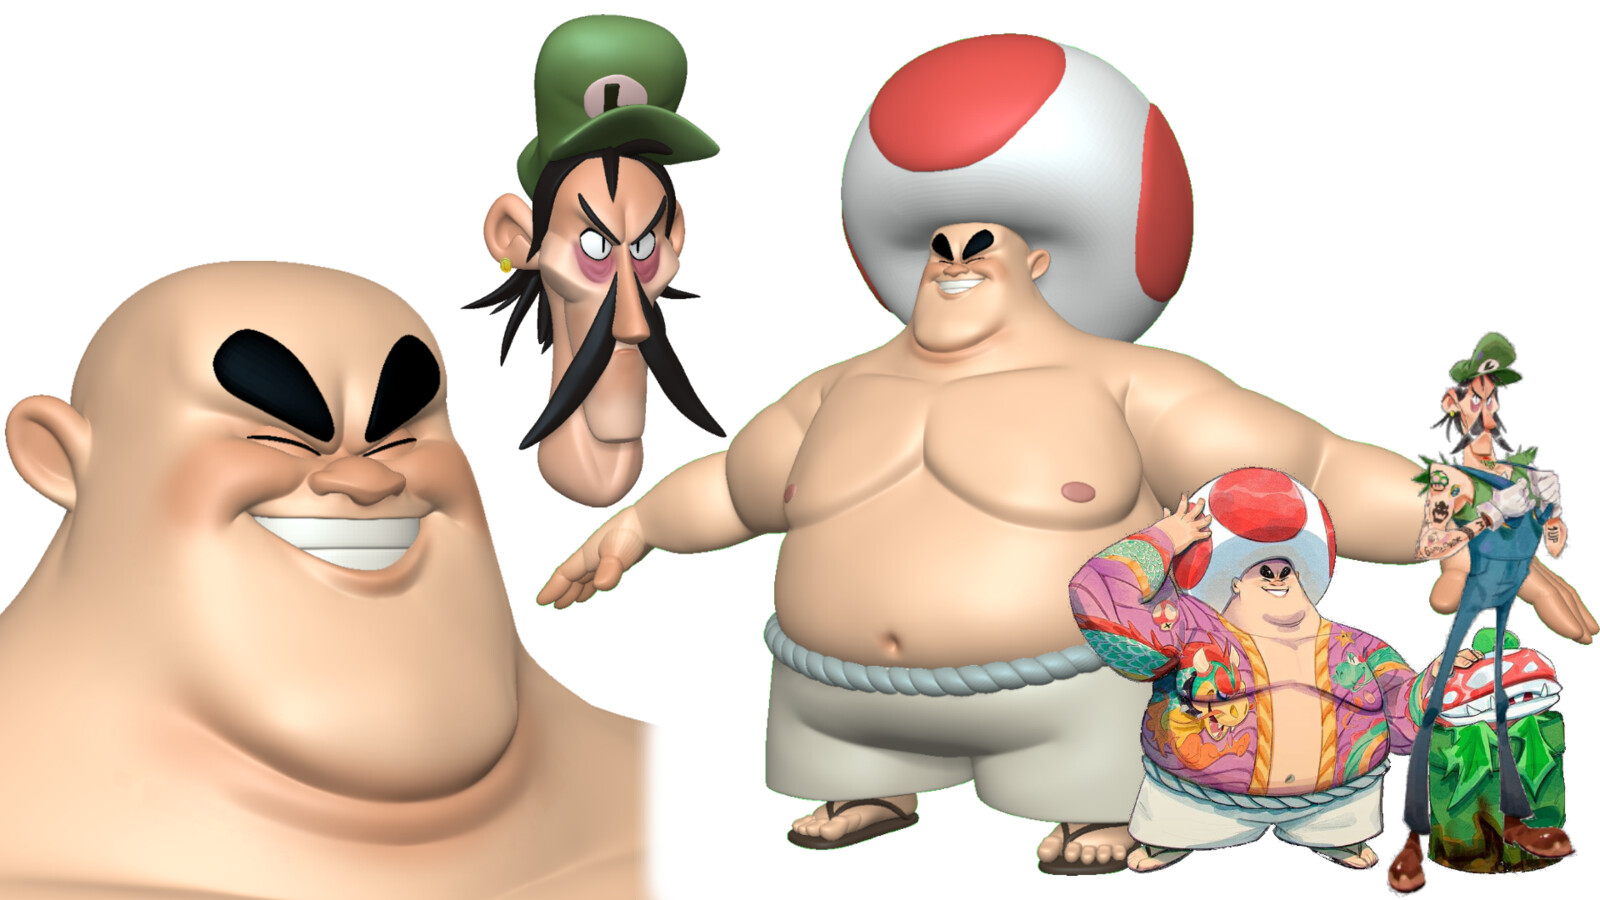 Super Mario Bad-Ass (2021) Original Concepts by Alex Jensen